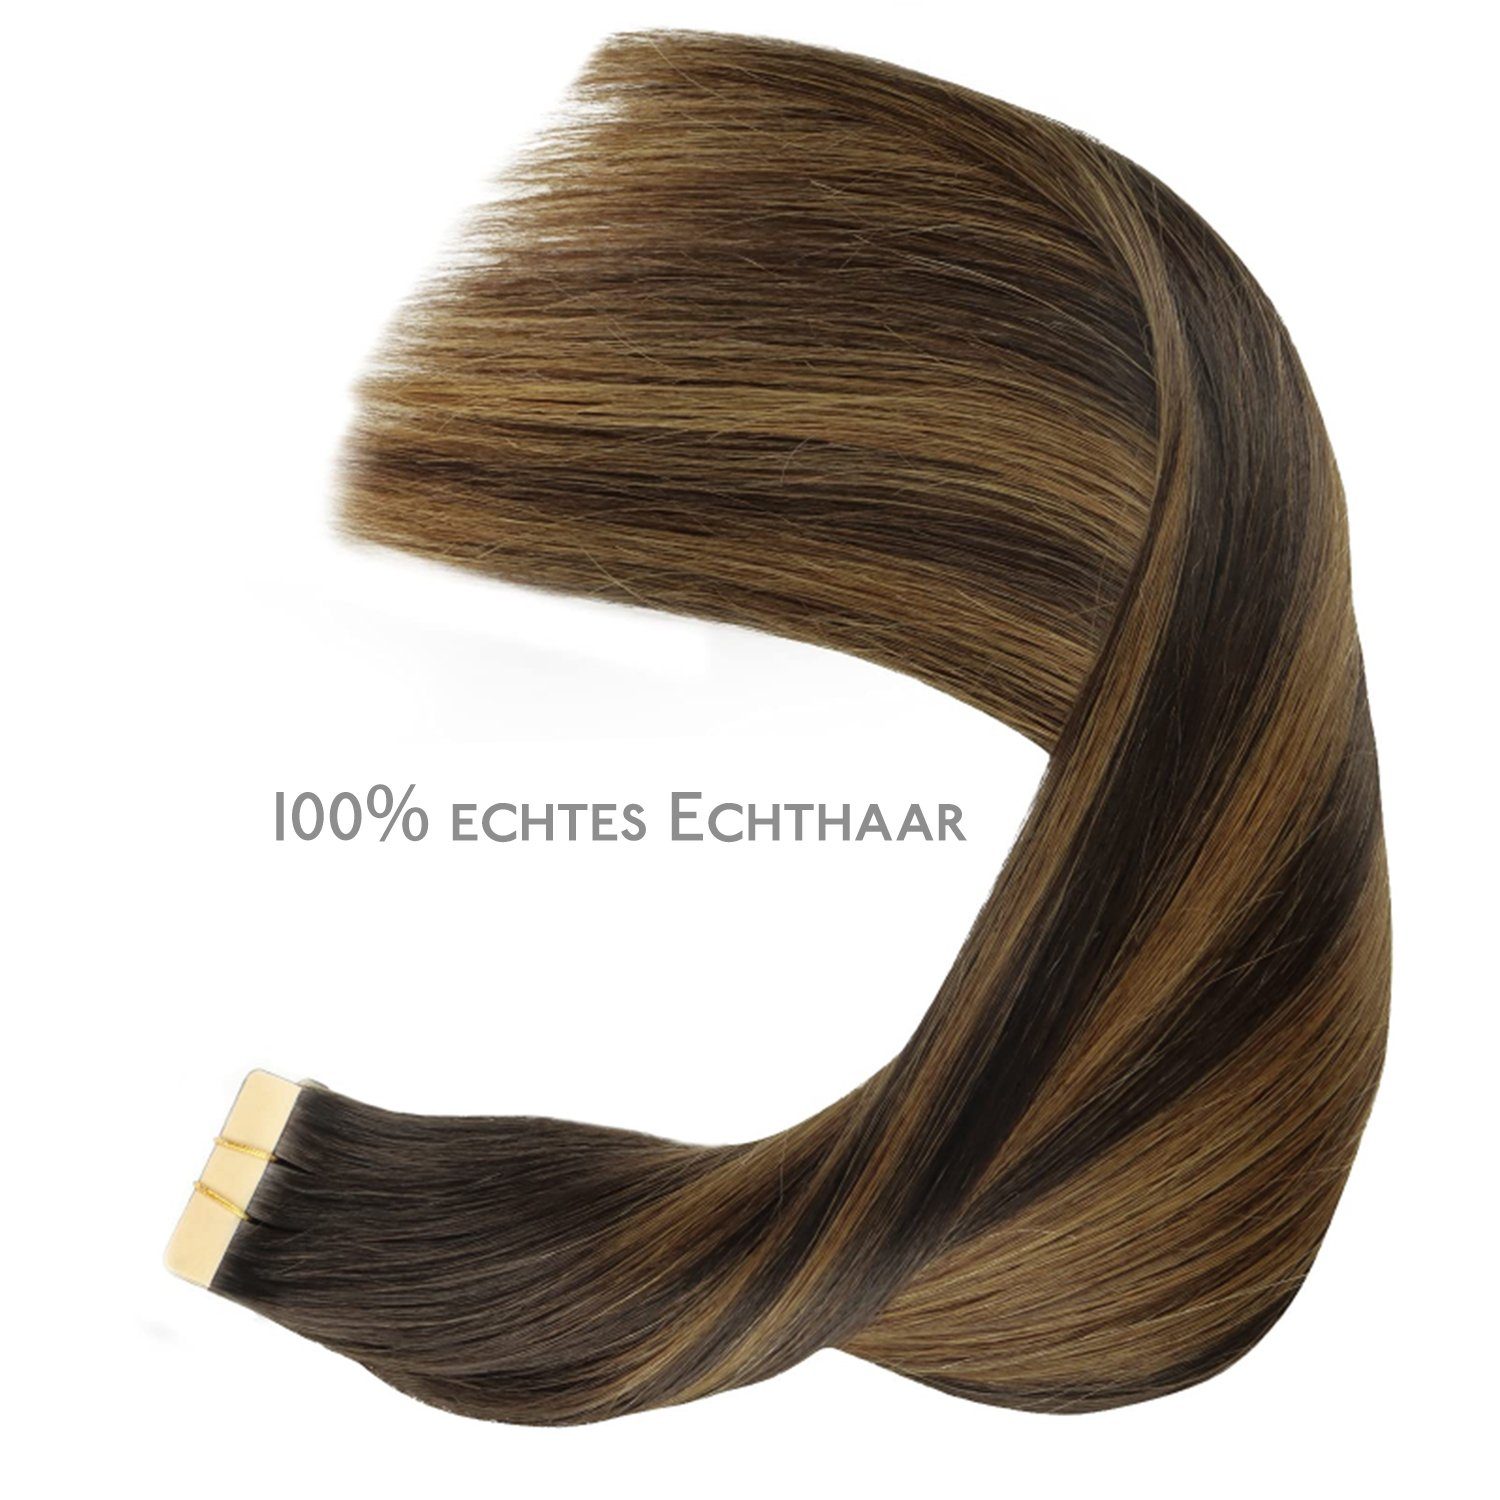 Echthaar-Extension bis Kastanienbraun Ombre Wennalife Tape-in-Haarverlängerung,20Stück Dunkelbraun